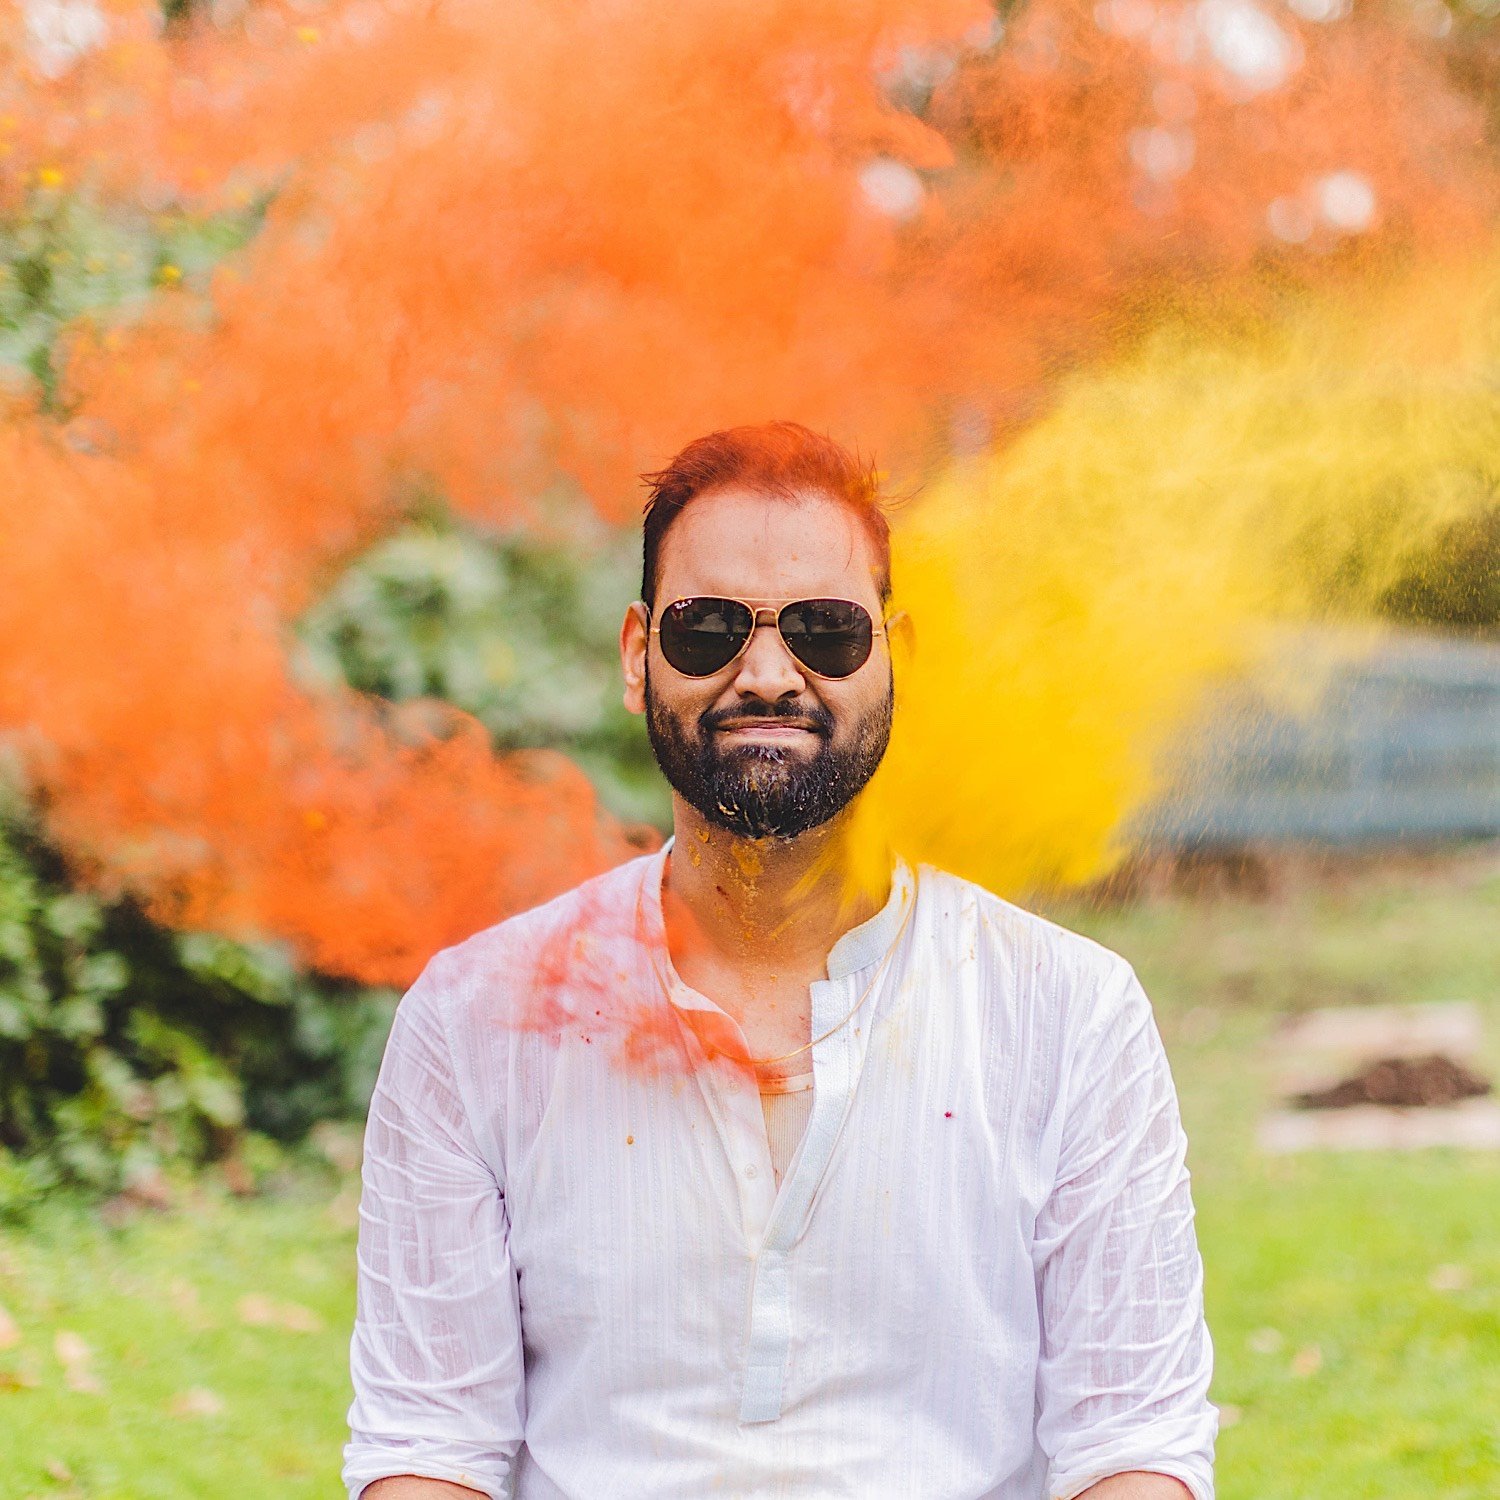 Groom wearing sunglasses has orange and yellow powder thrown at him during Haldi celebration